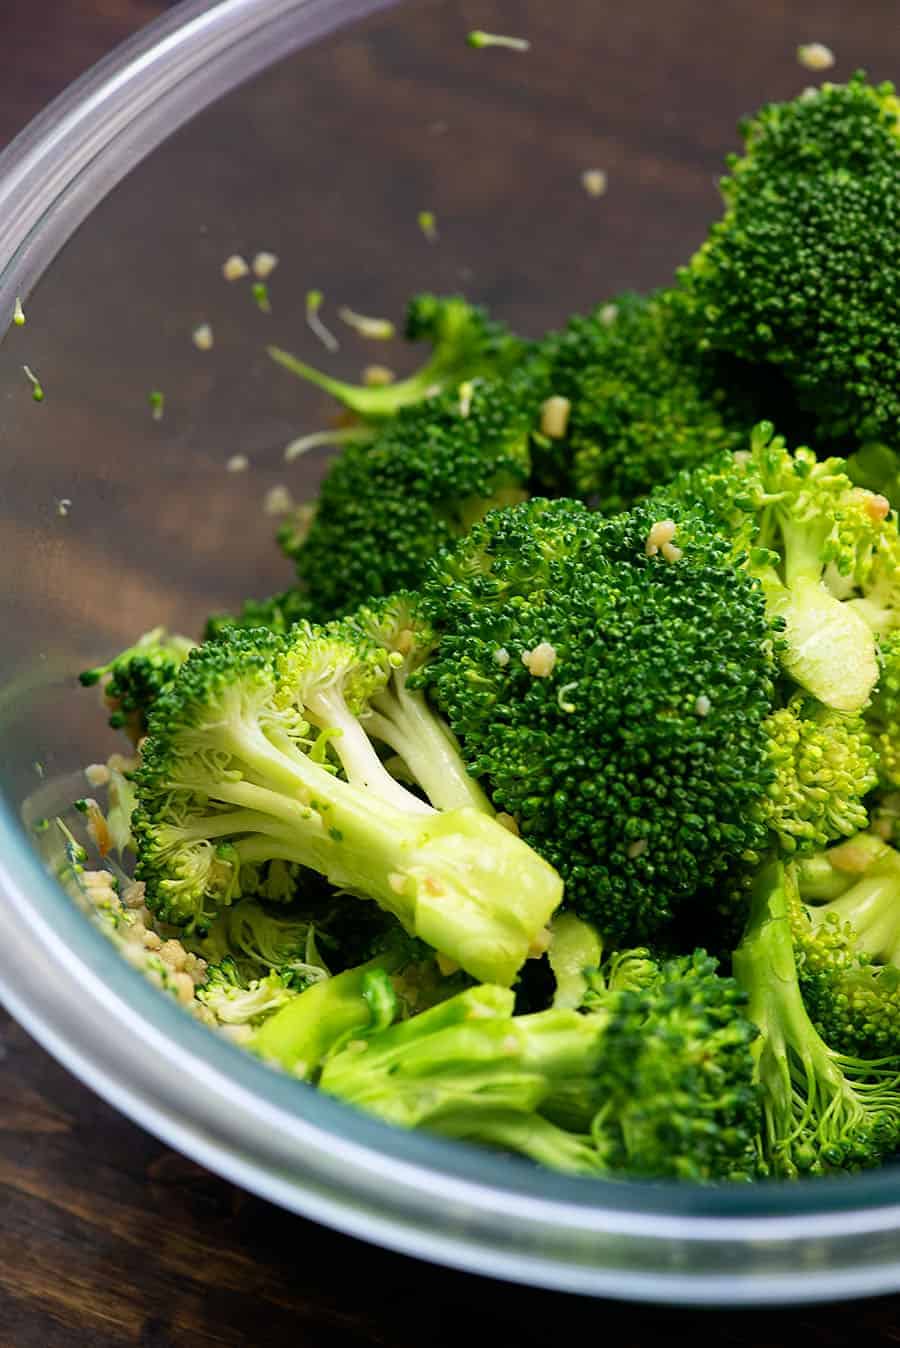 seasoned broccoli to roast in a glass bowl